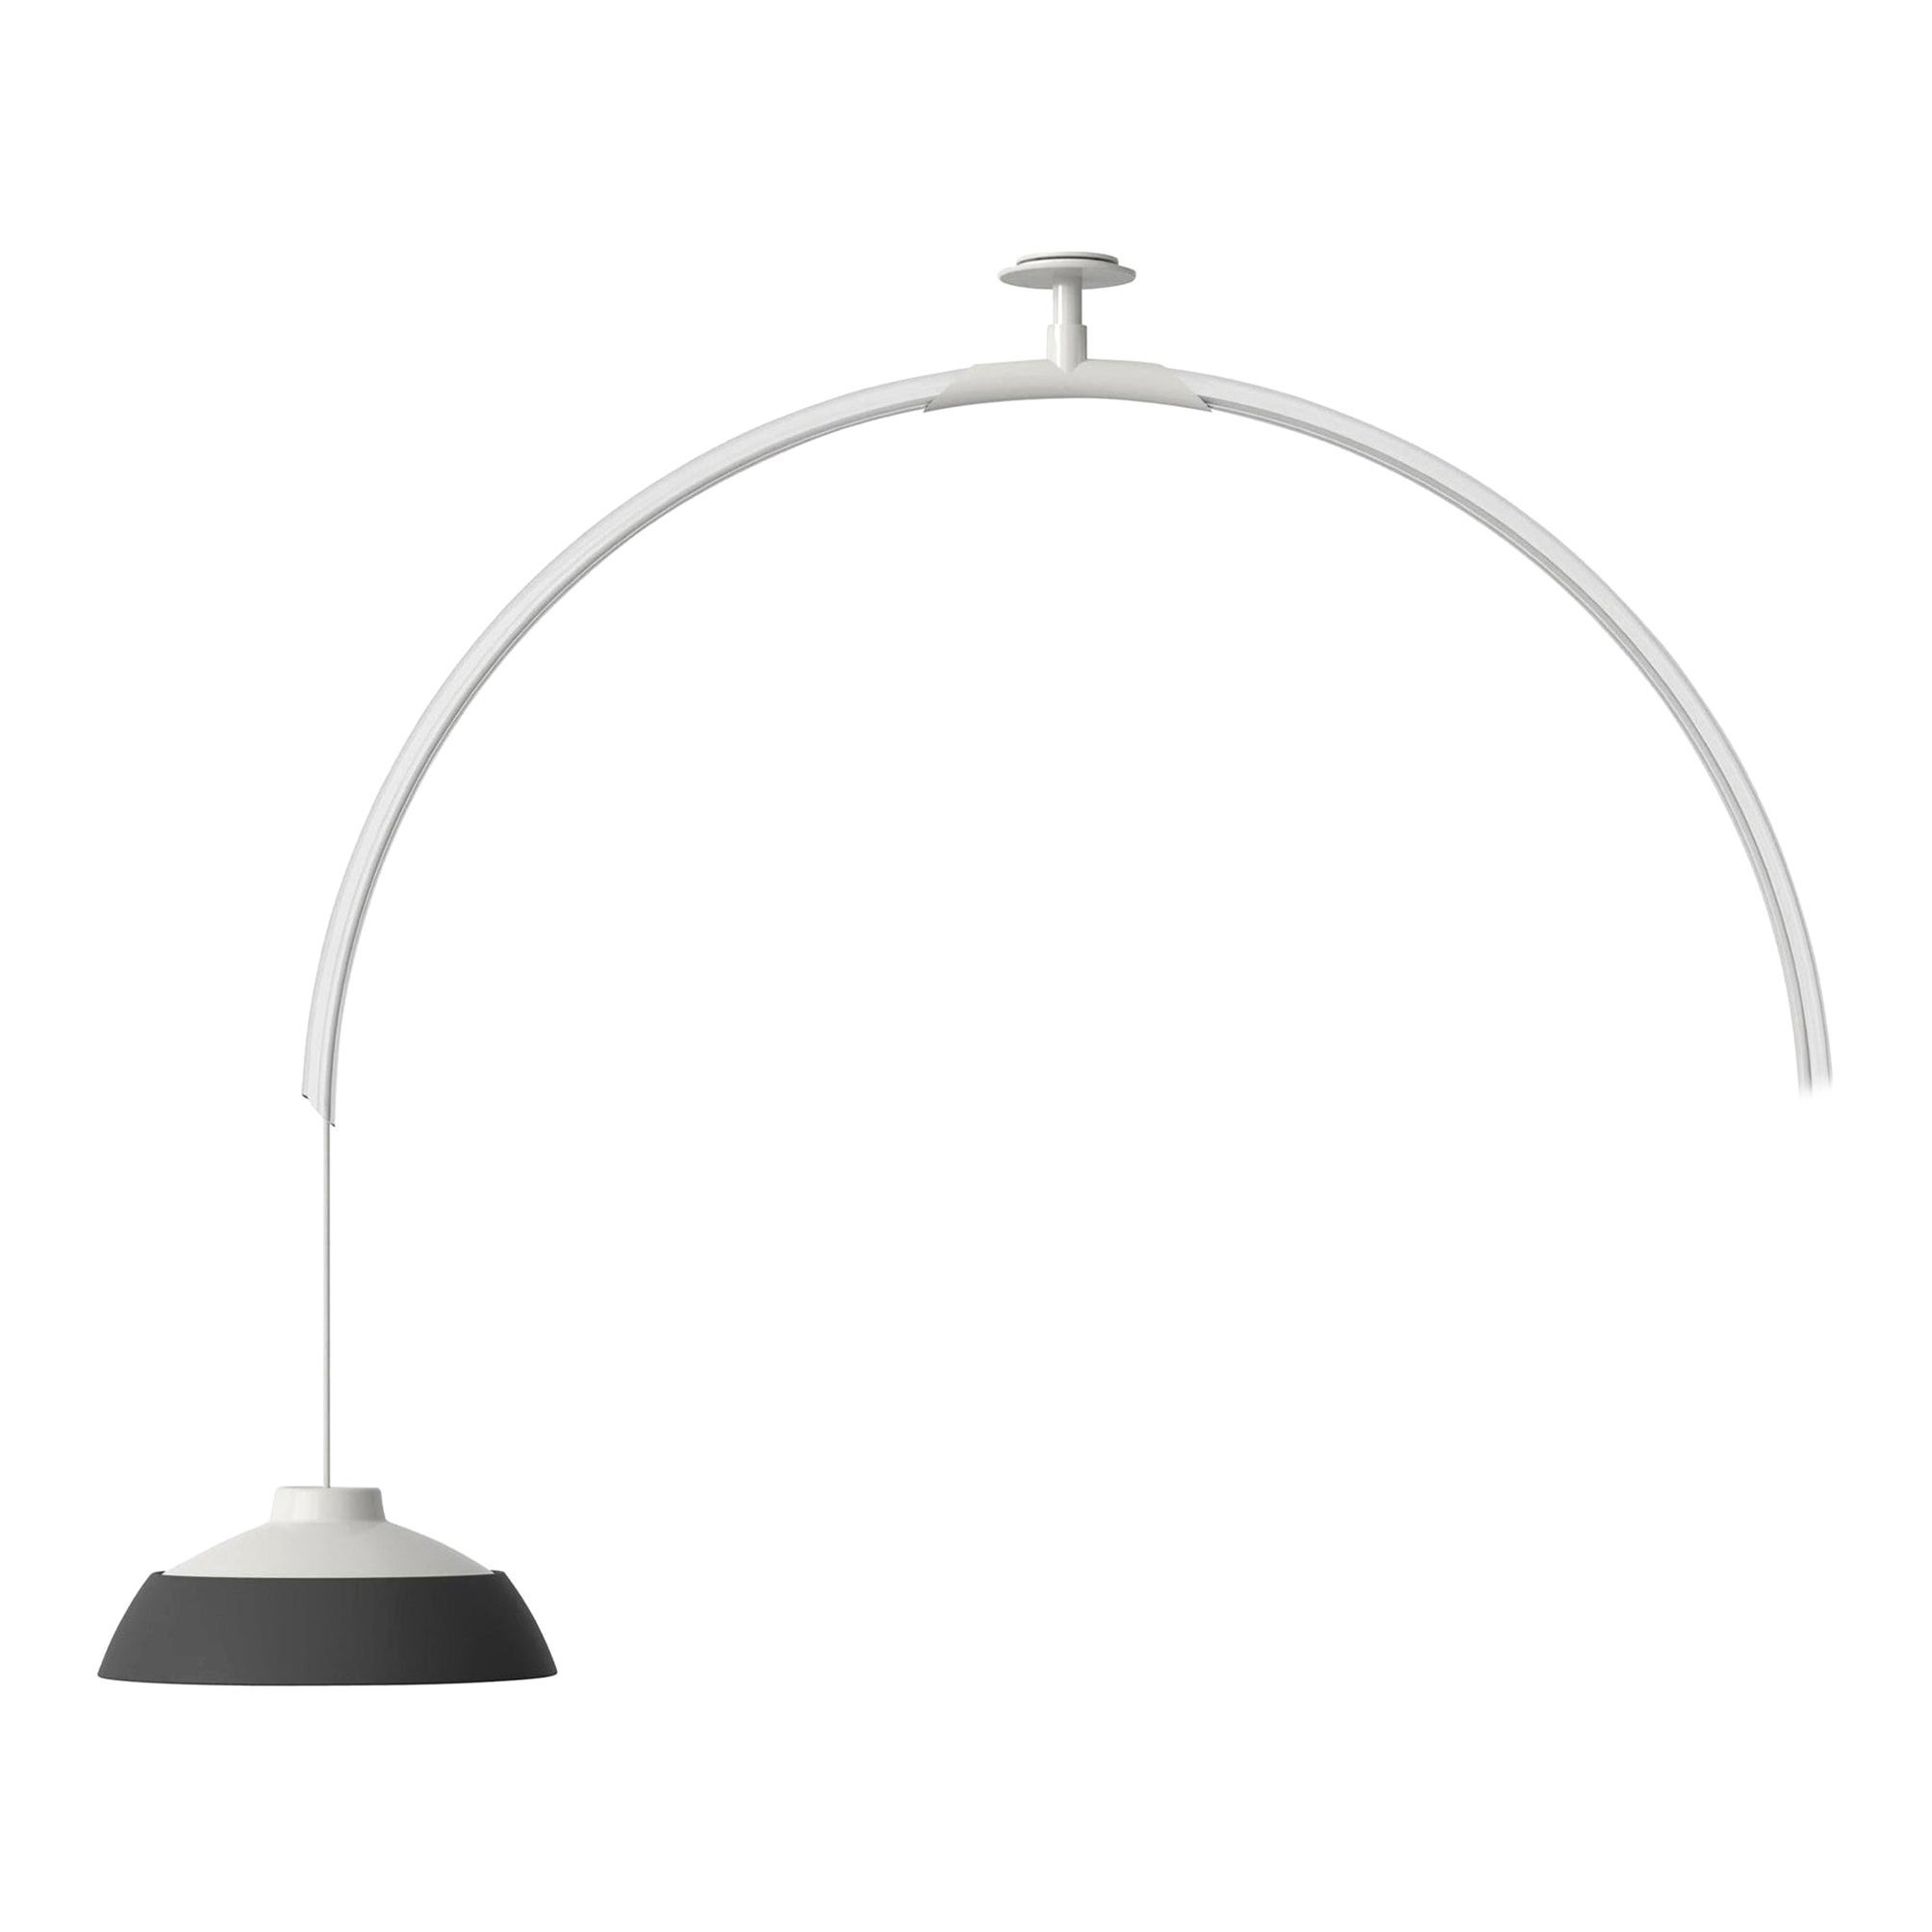 Gino Sarfatti Lamp Model 2129 by Astep